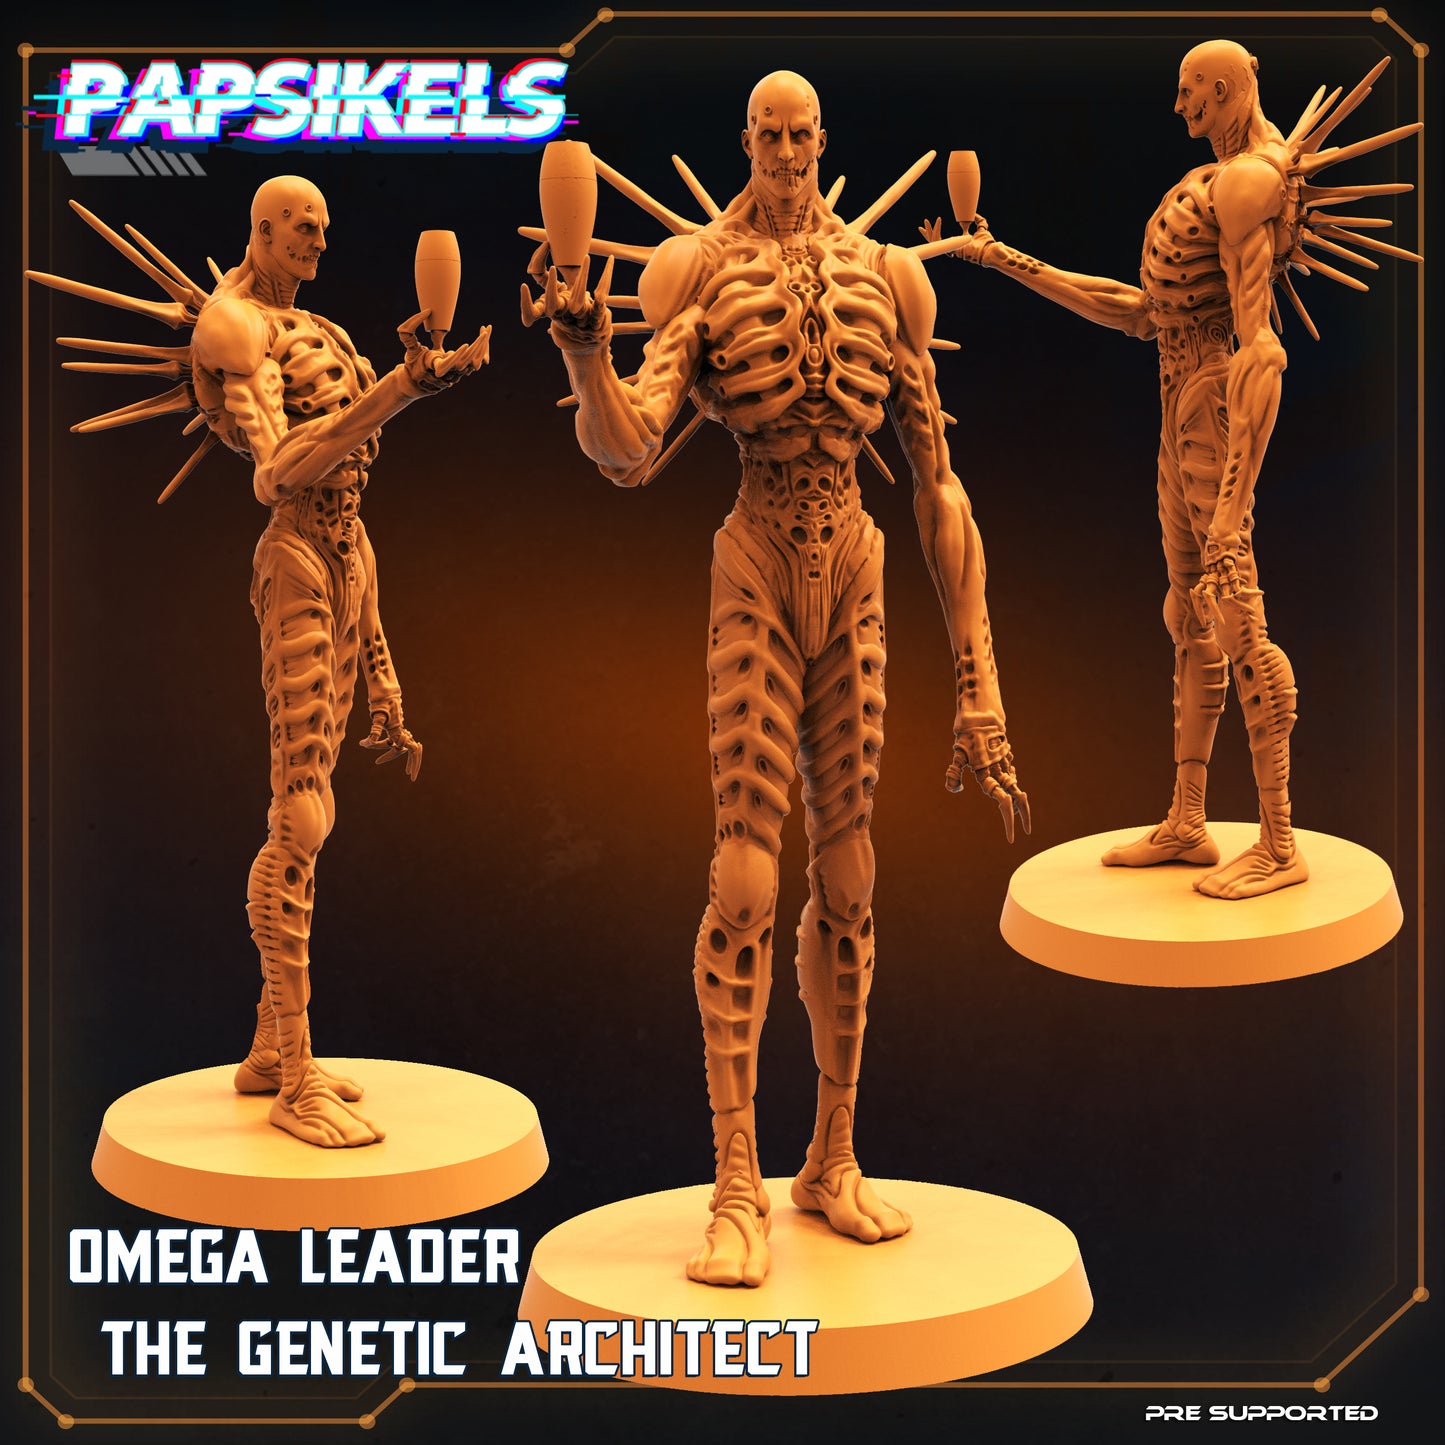 Omega Leader. The Genetic Architect